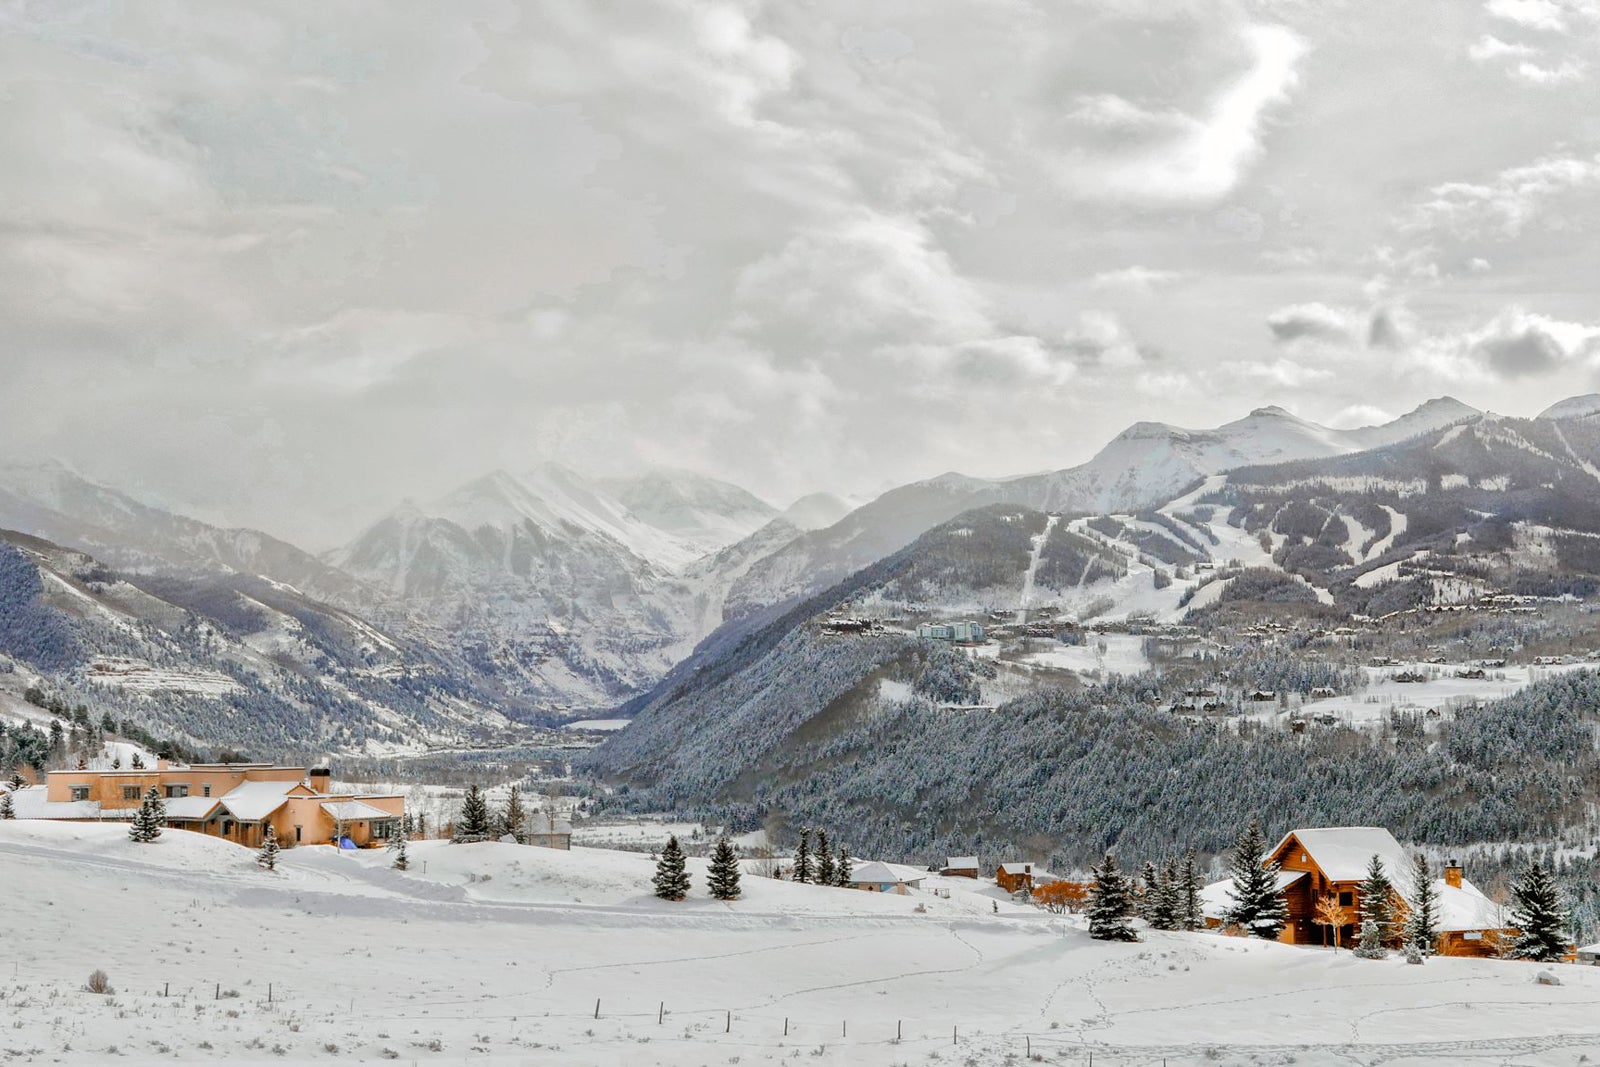 Aspen Real Estate & Apres Ski Spots Close To The Action